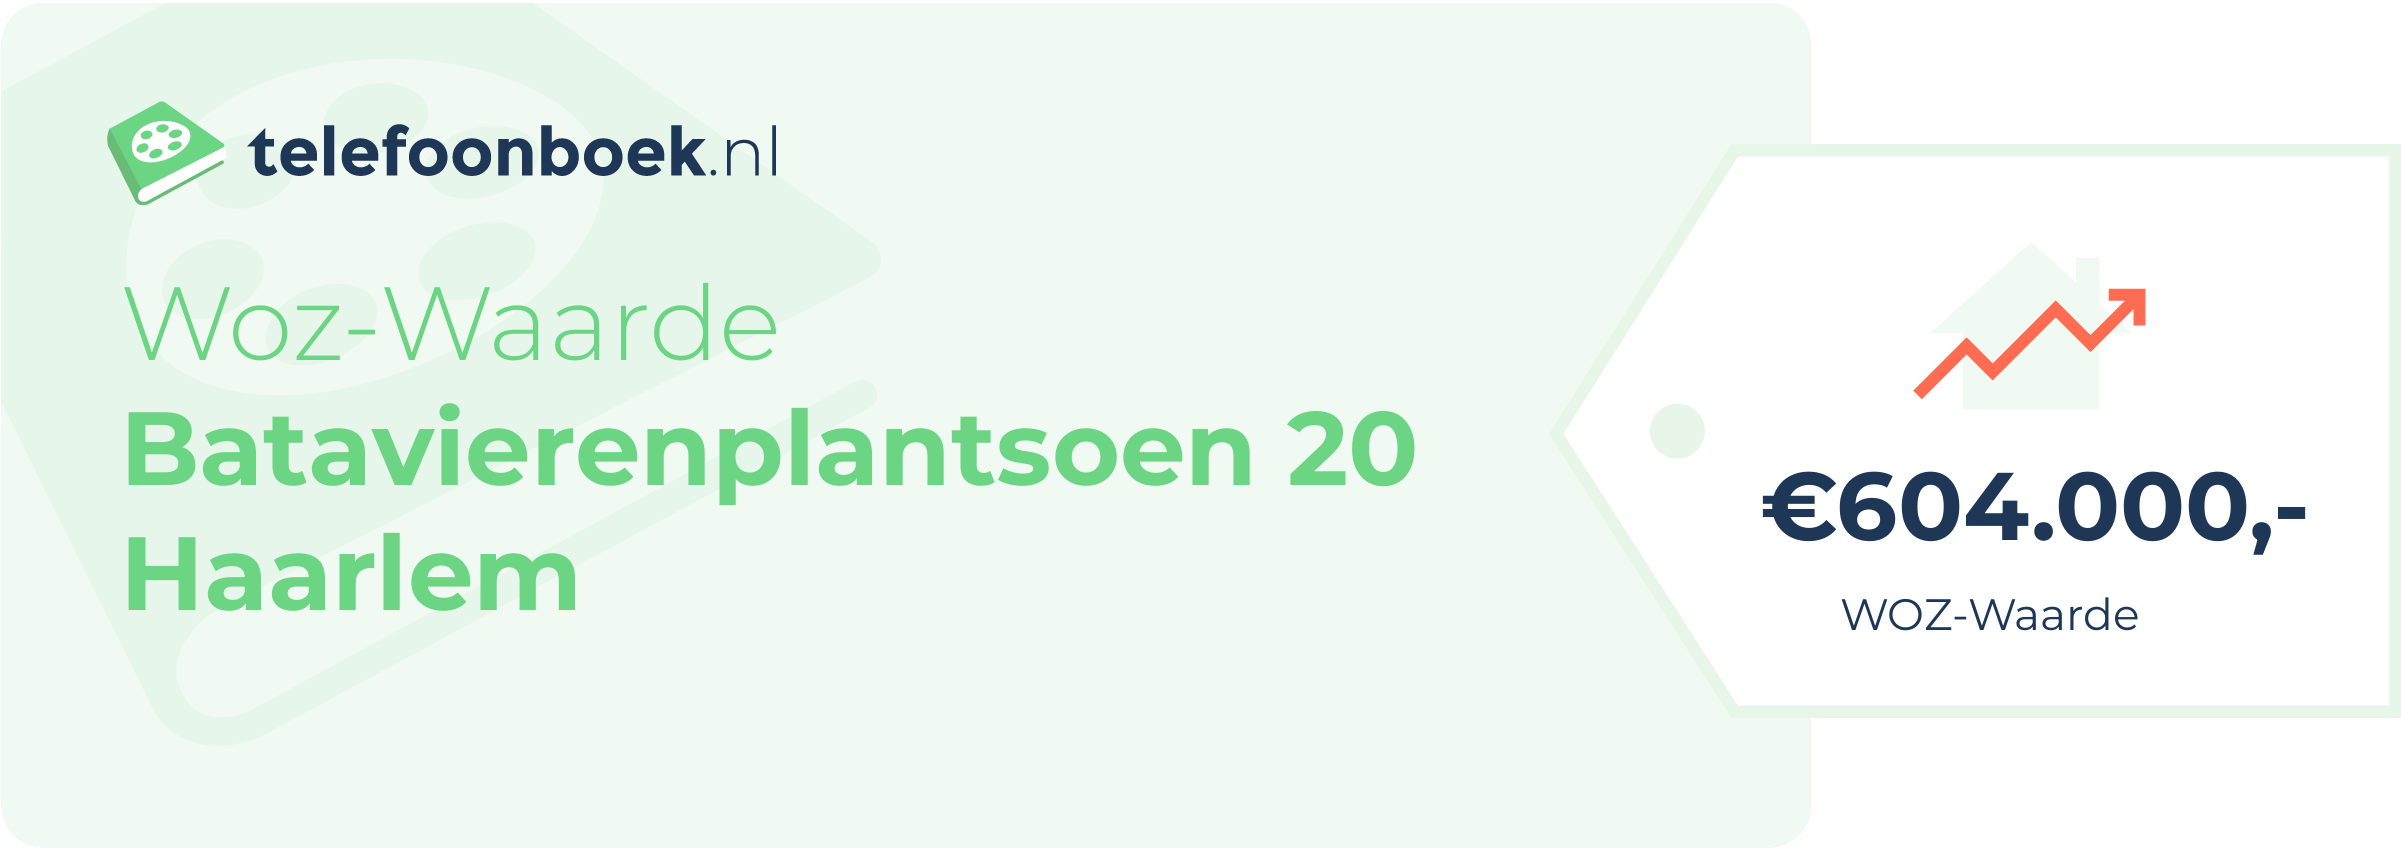 WOZ-waarde Batavierenplantsoen 20 Haarlem